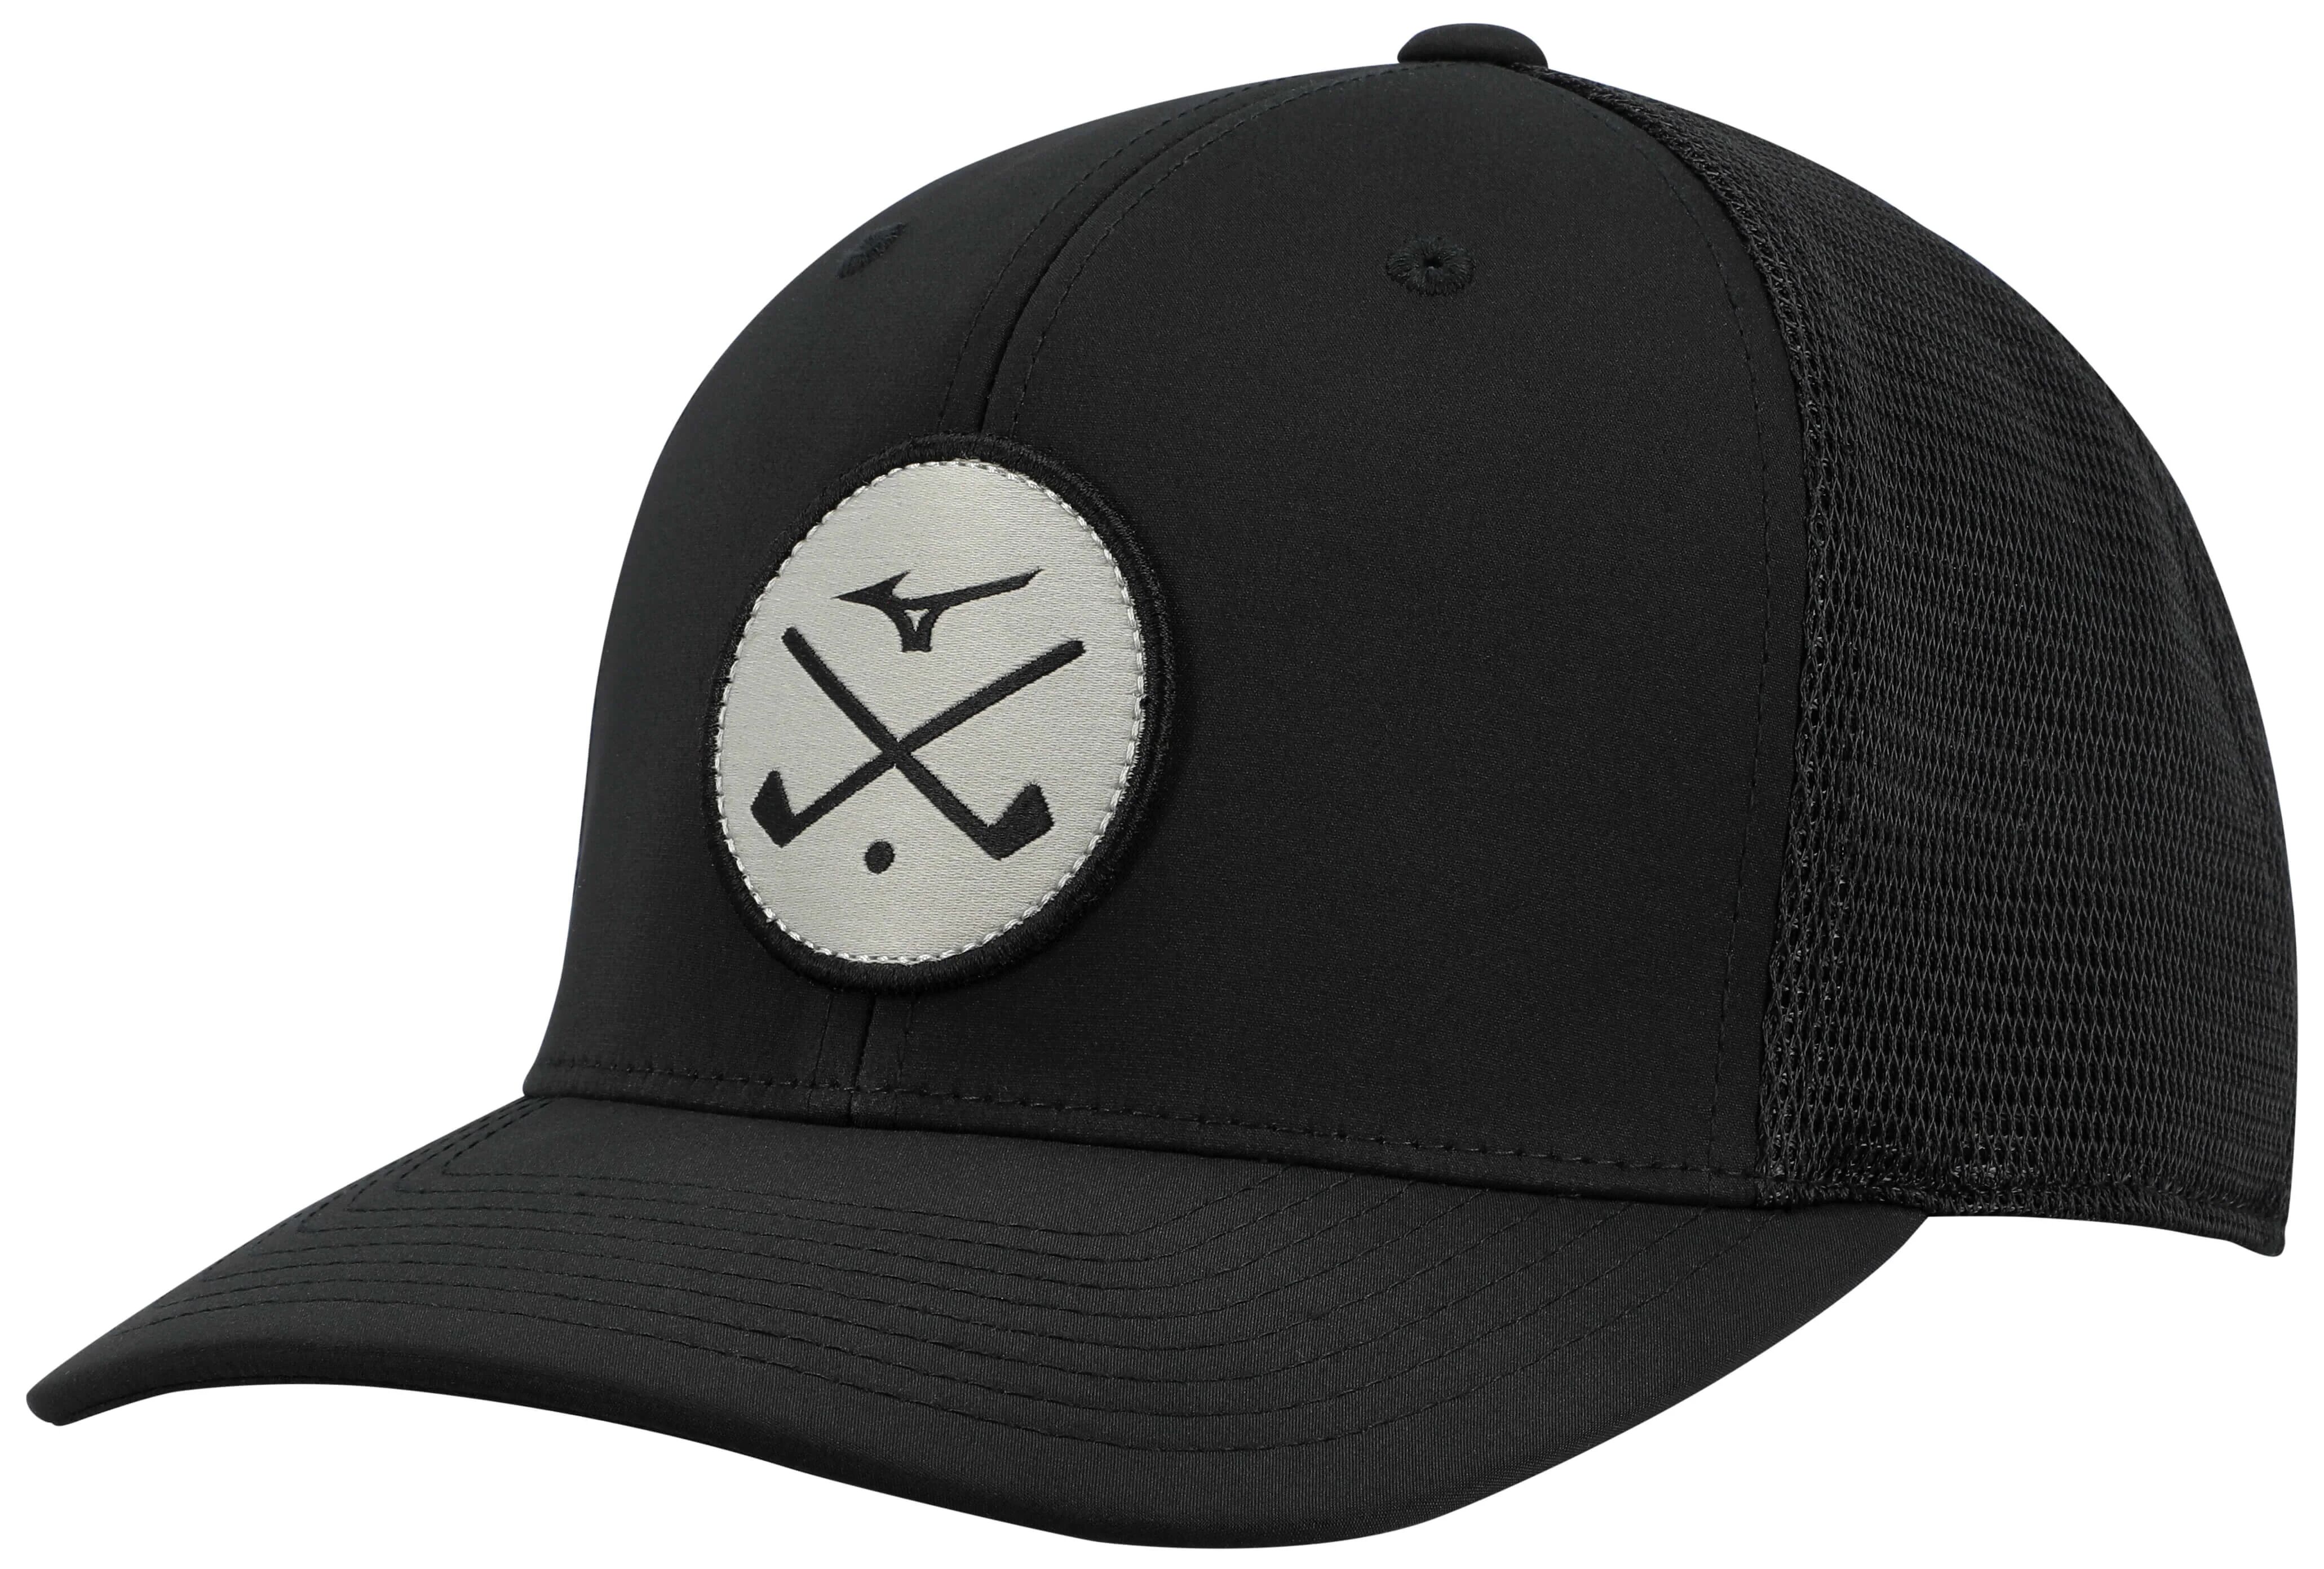 Mizuno Crossed Clubs Mesh Snapback Men's Golf Hat - Black